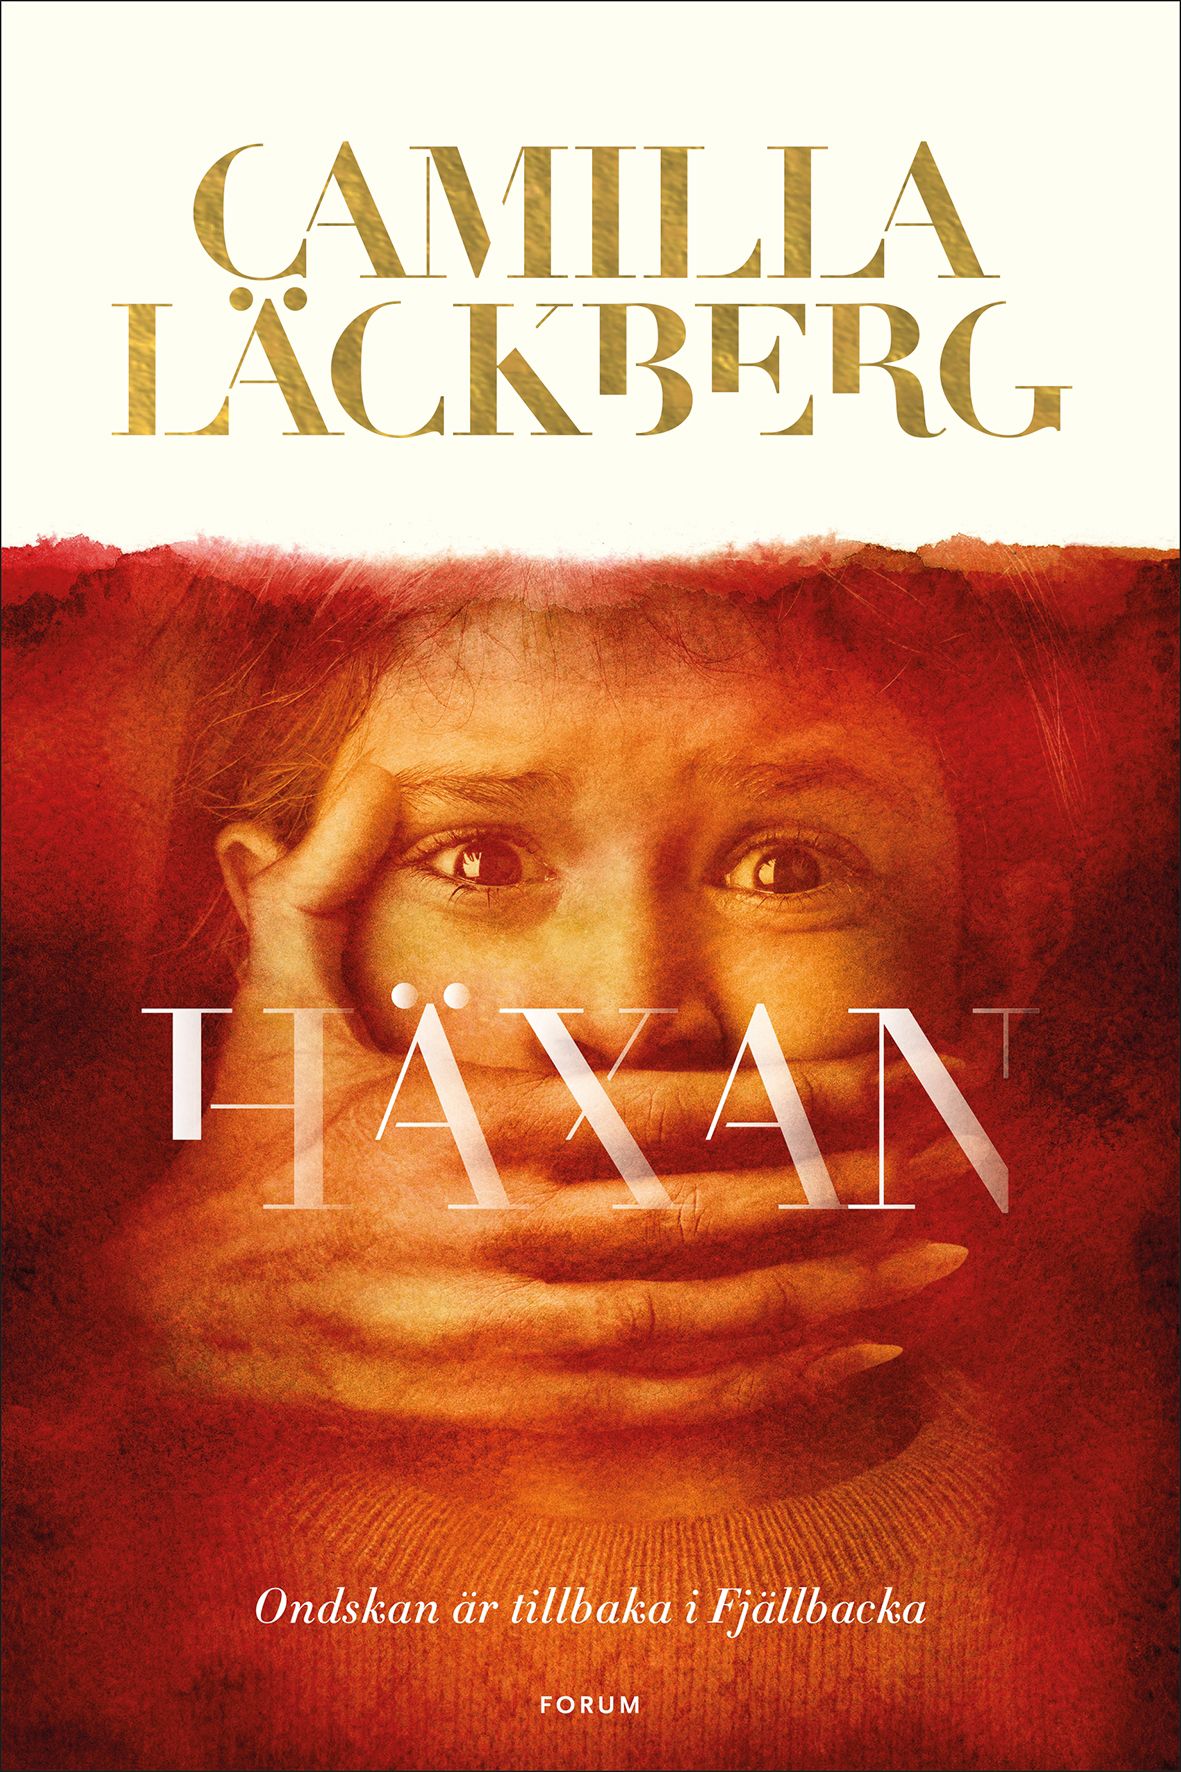 Häxan, eBook by Camilla Läckberg